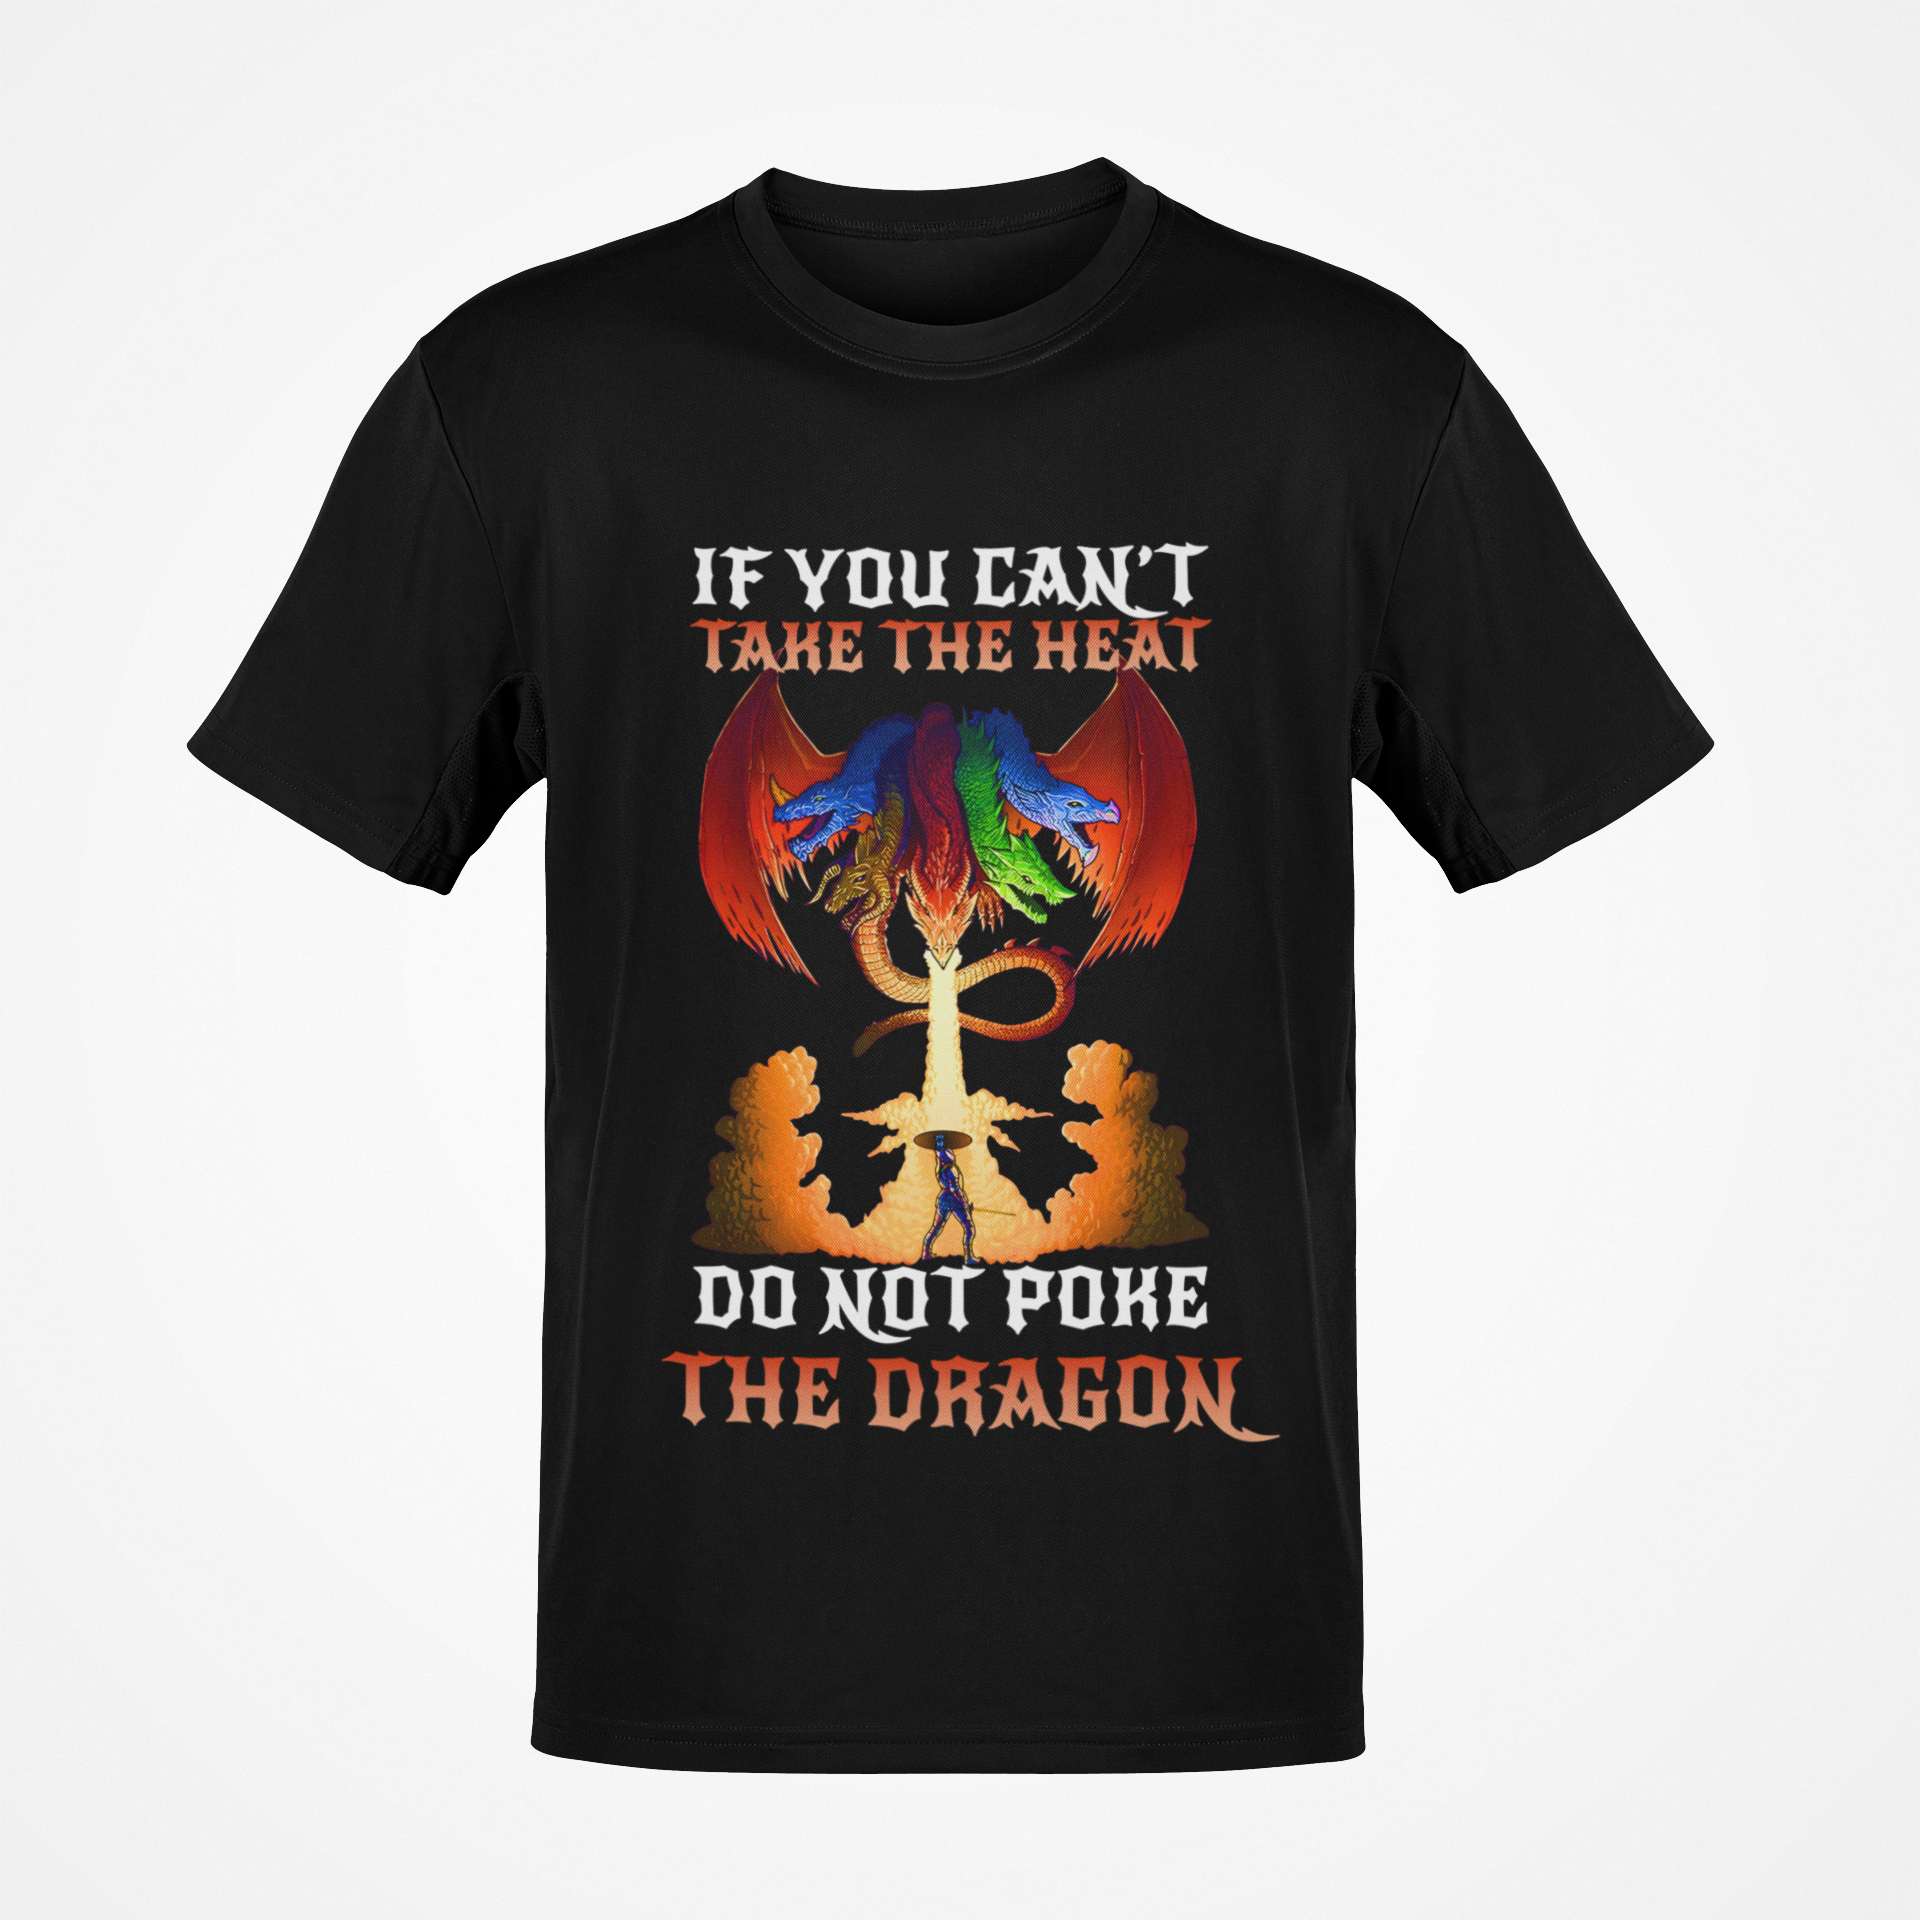 If You Can't Take The Heat, Do Not Poke The Dragon T-shirt